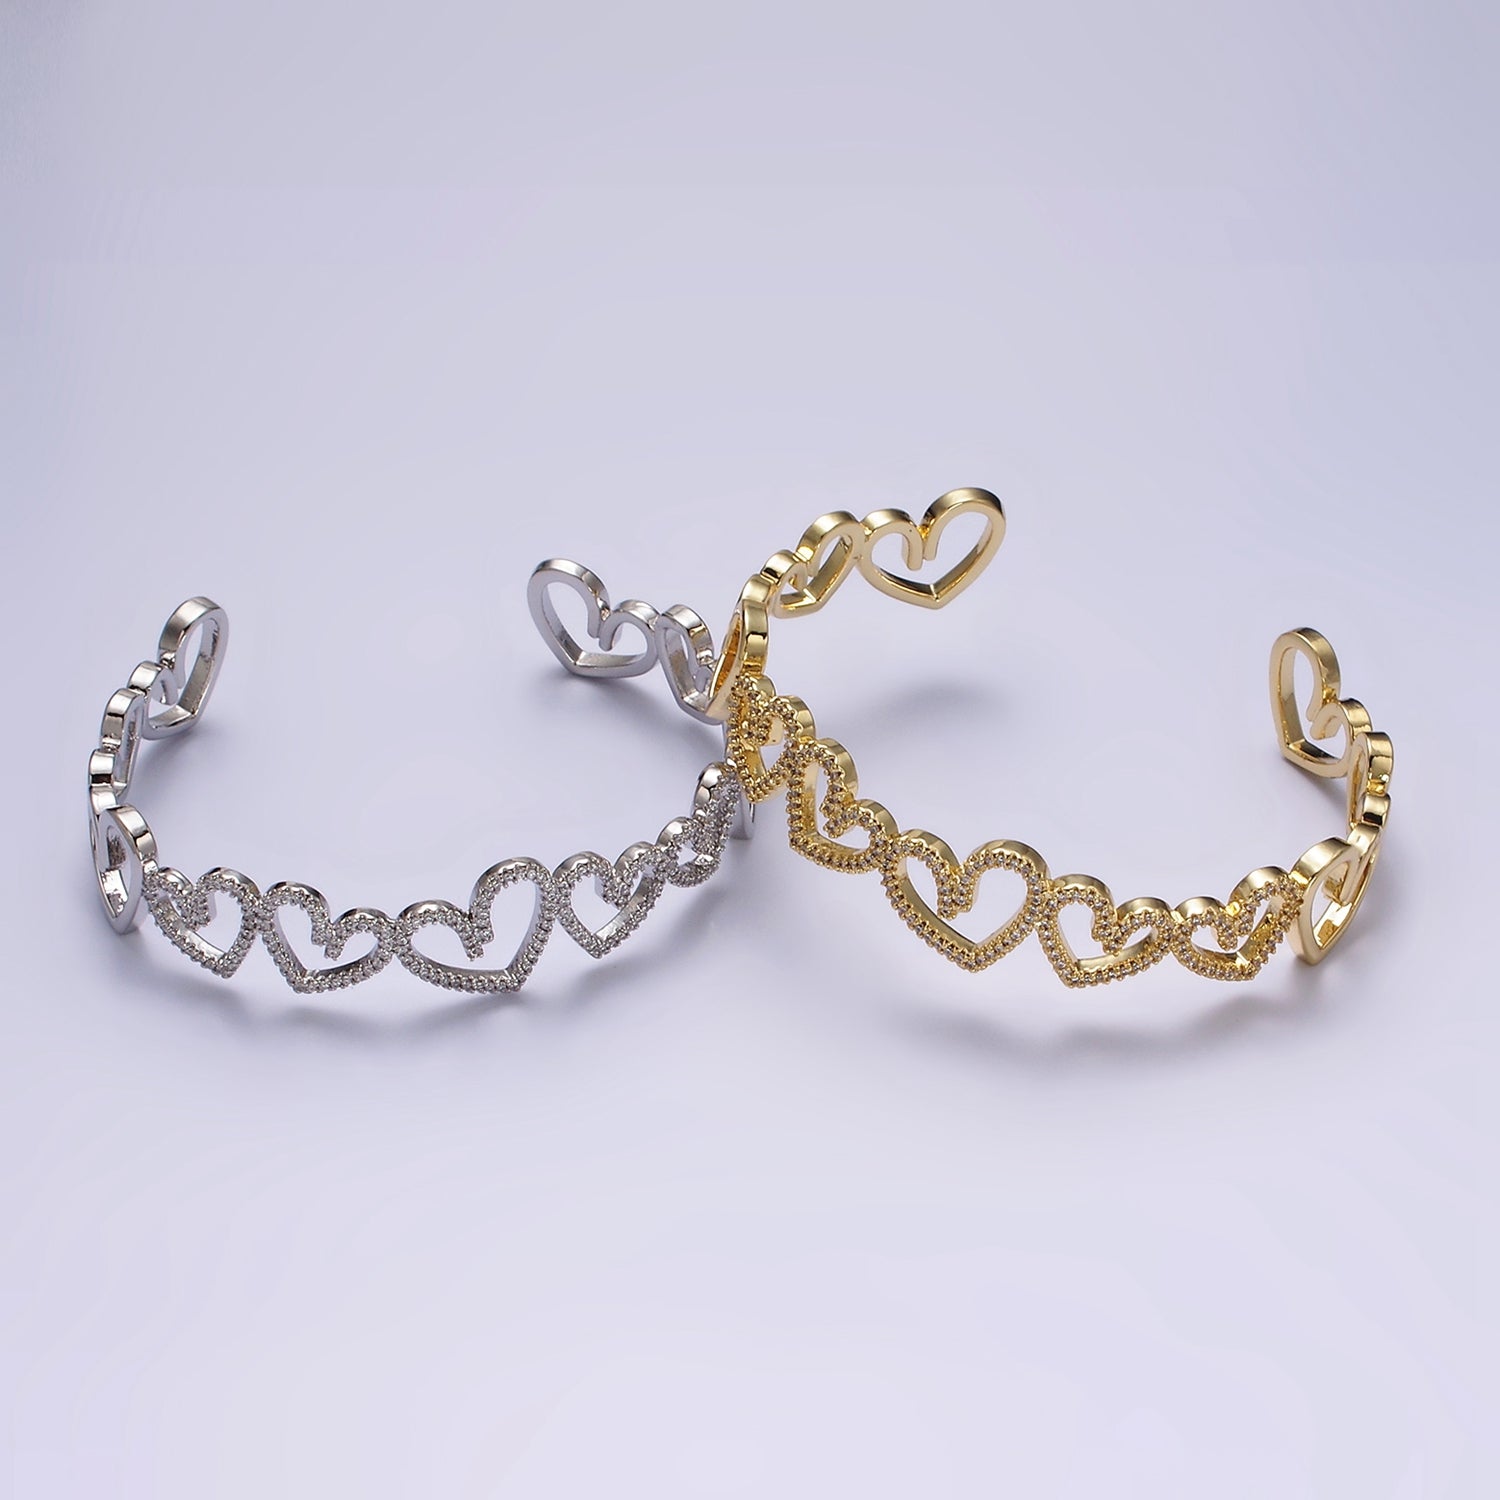 14K Gold Filled Open Heart Micro Paved CZ Cuff Bangle Bracelet in Silver & Gold | WA1920 WA1921 - DLUXCA